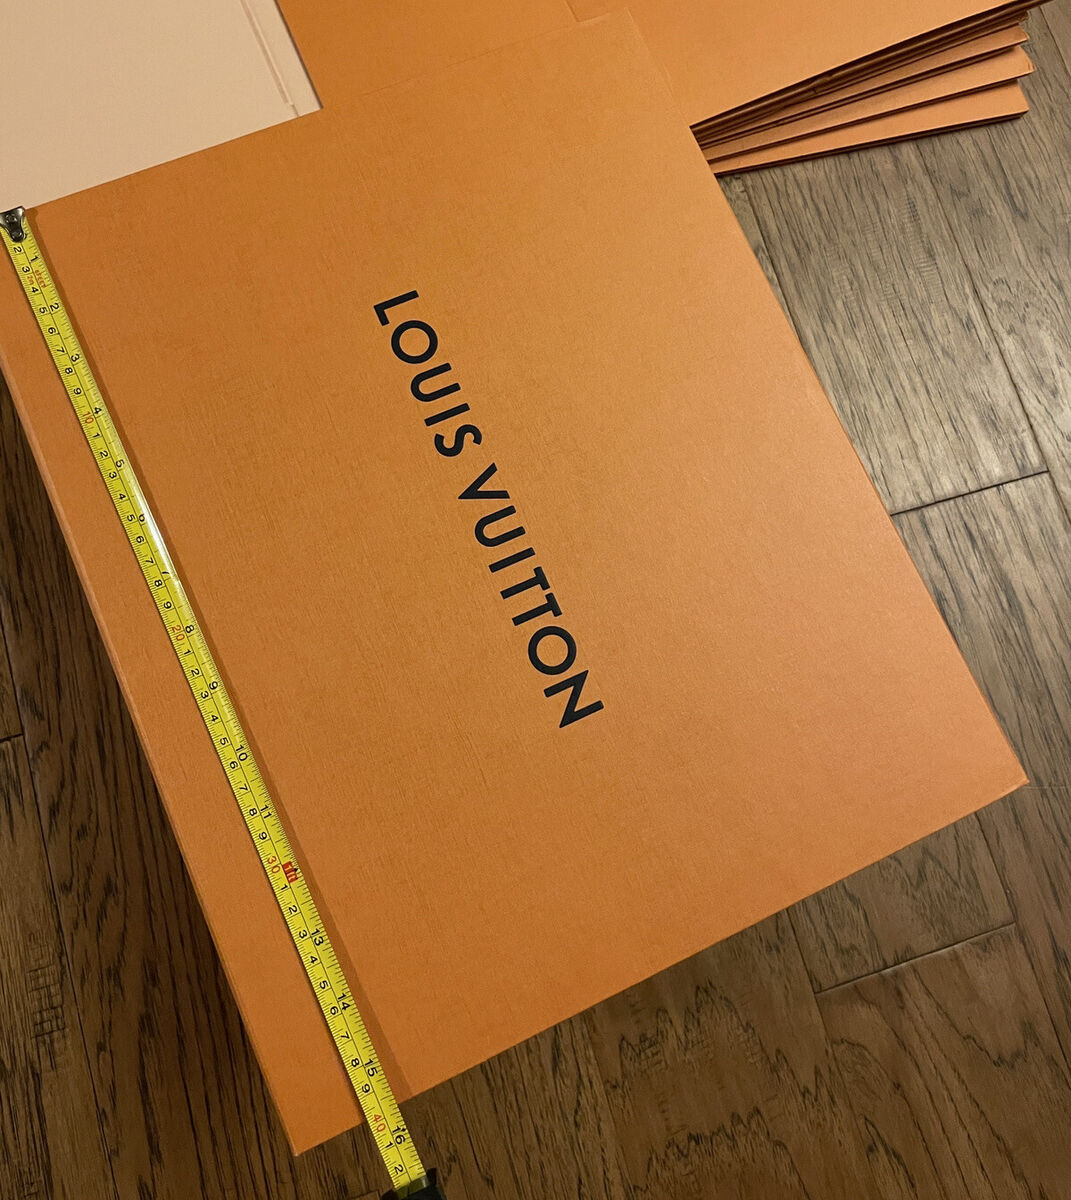 LOUIS VUITTON LV Gift Box Empty Orange + Ribbon 6 3/4”x 6 3/4”x 2.5” -  EXCELLENT